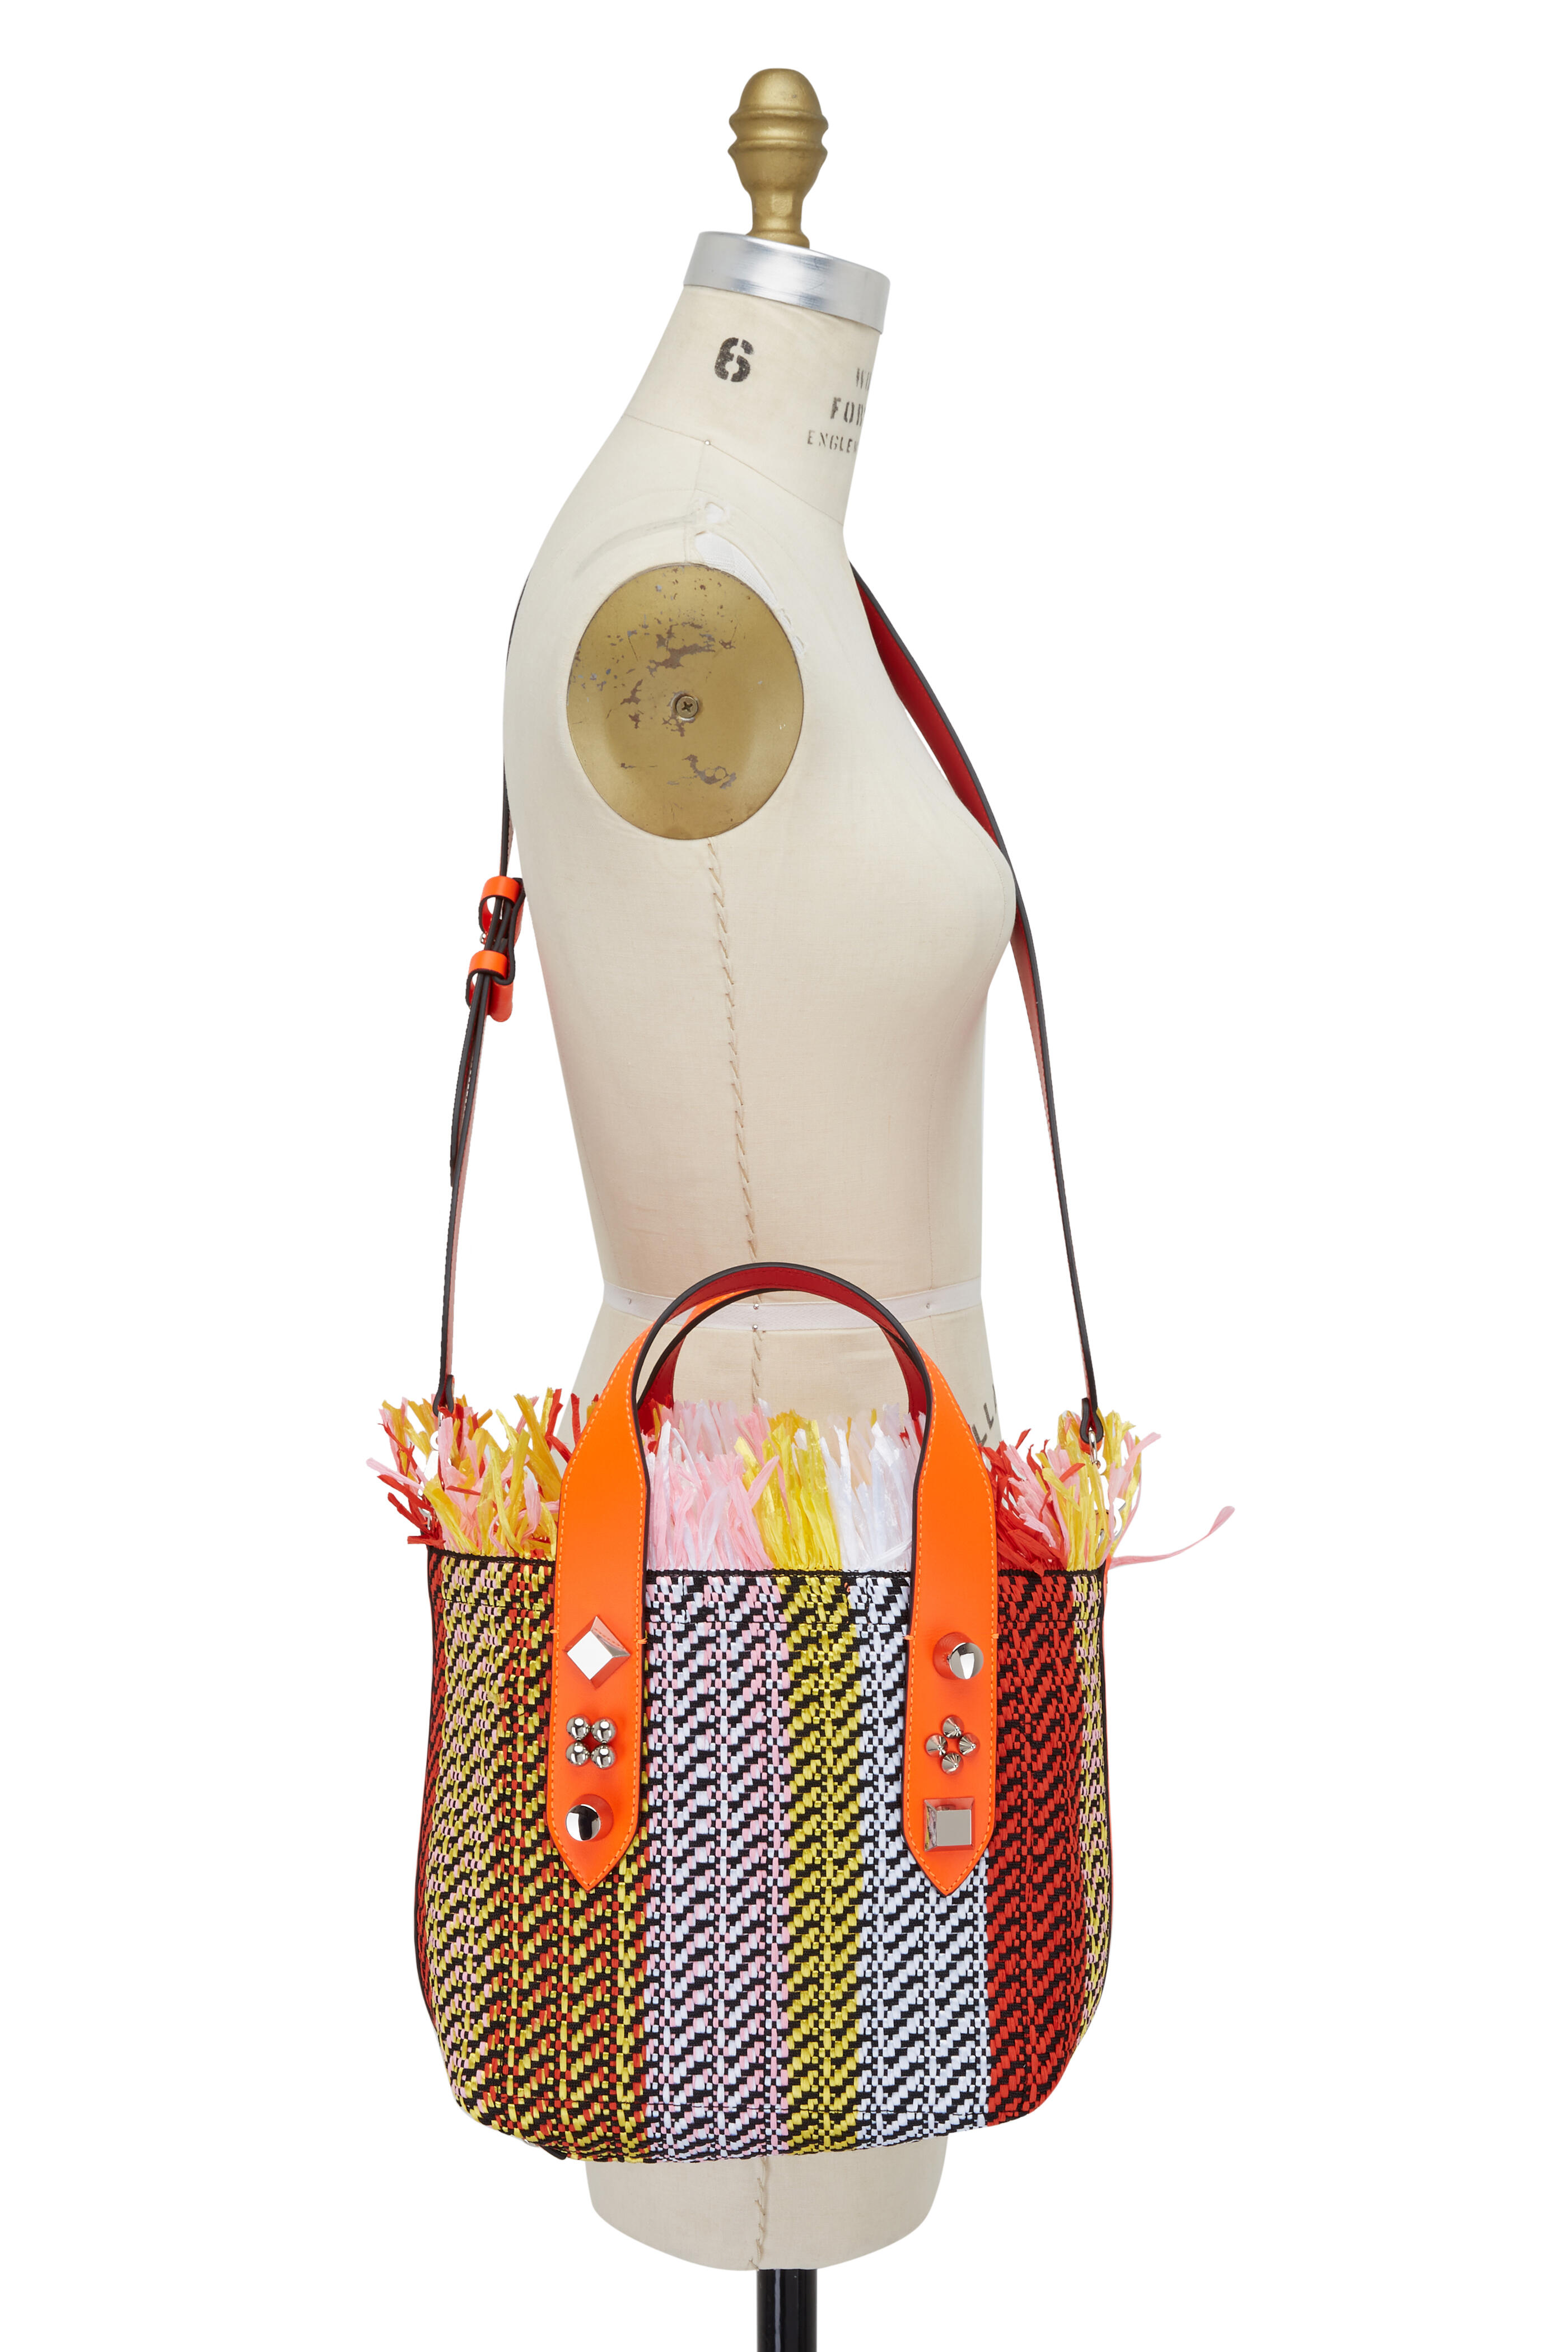 Luxury handbag - Frangibus Christian Louboutin medium tote bag in  multicolor fabric